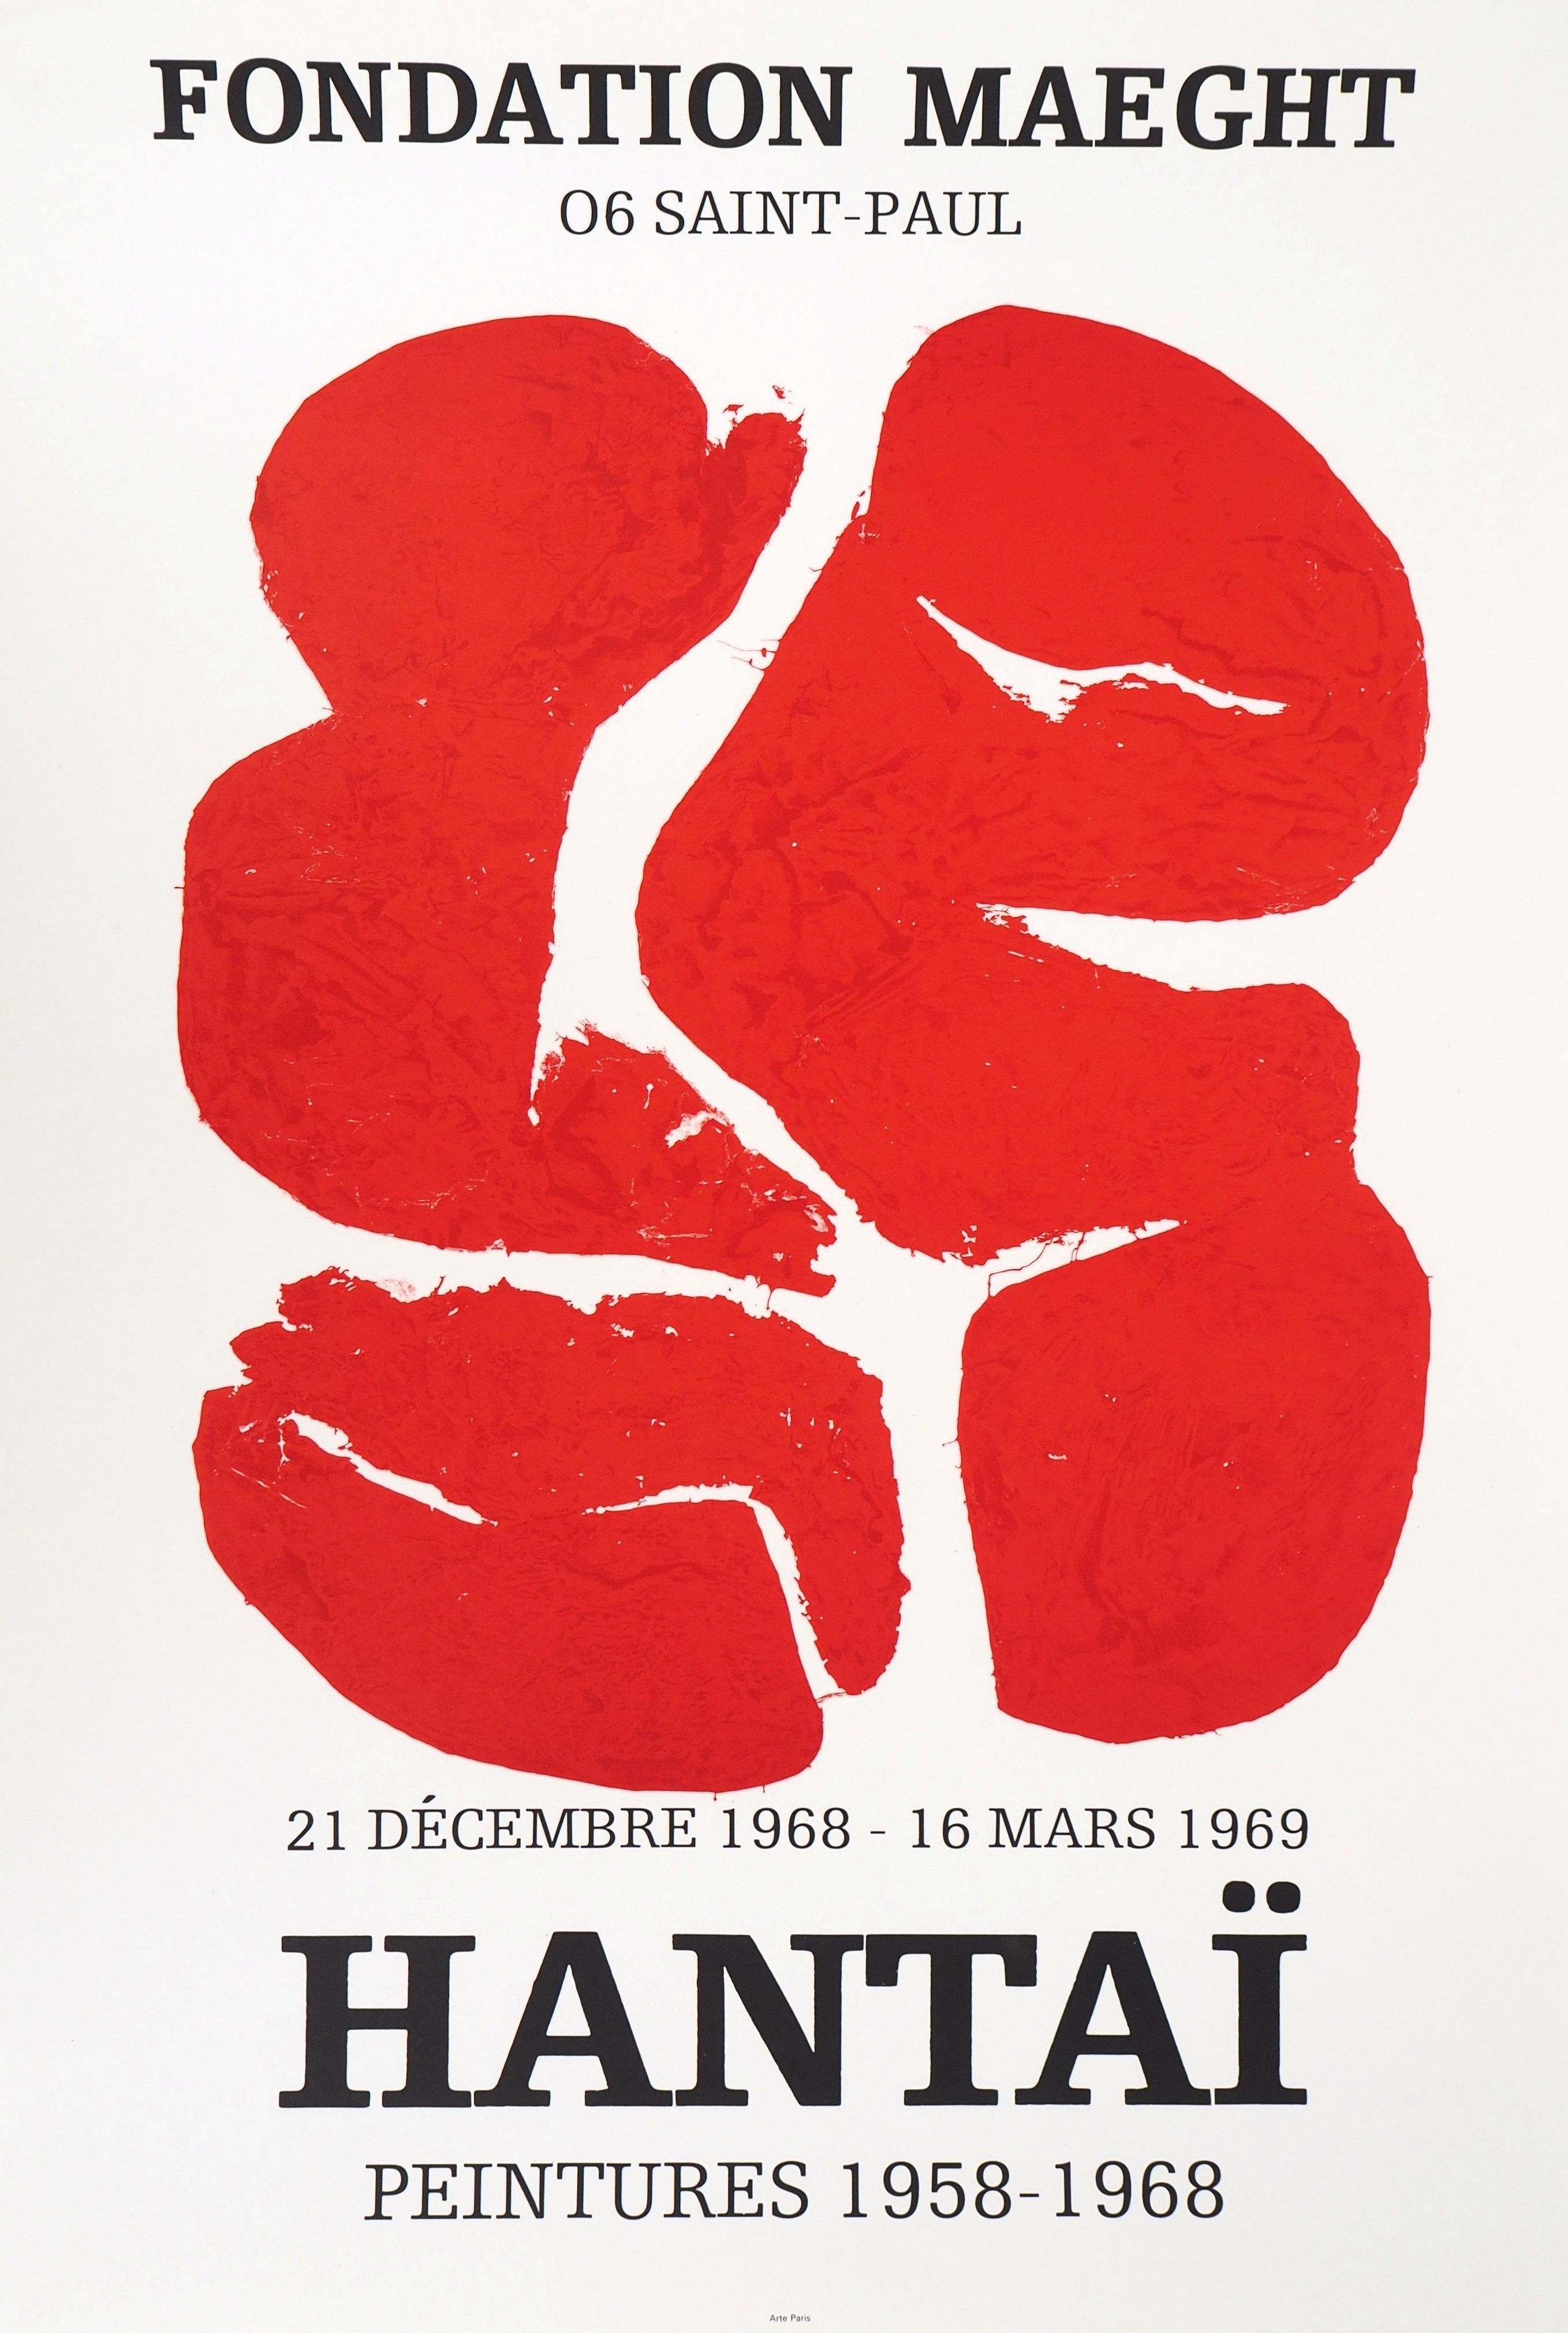 Simon Hantaï Abstract Print - Abstract Red Tabula - Original Lithograph Poster (Fondation Maeght, 1969)